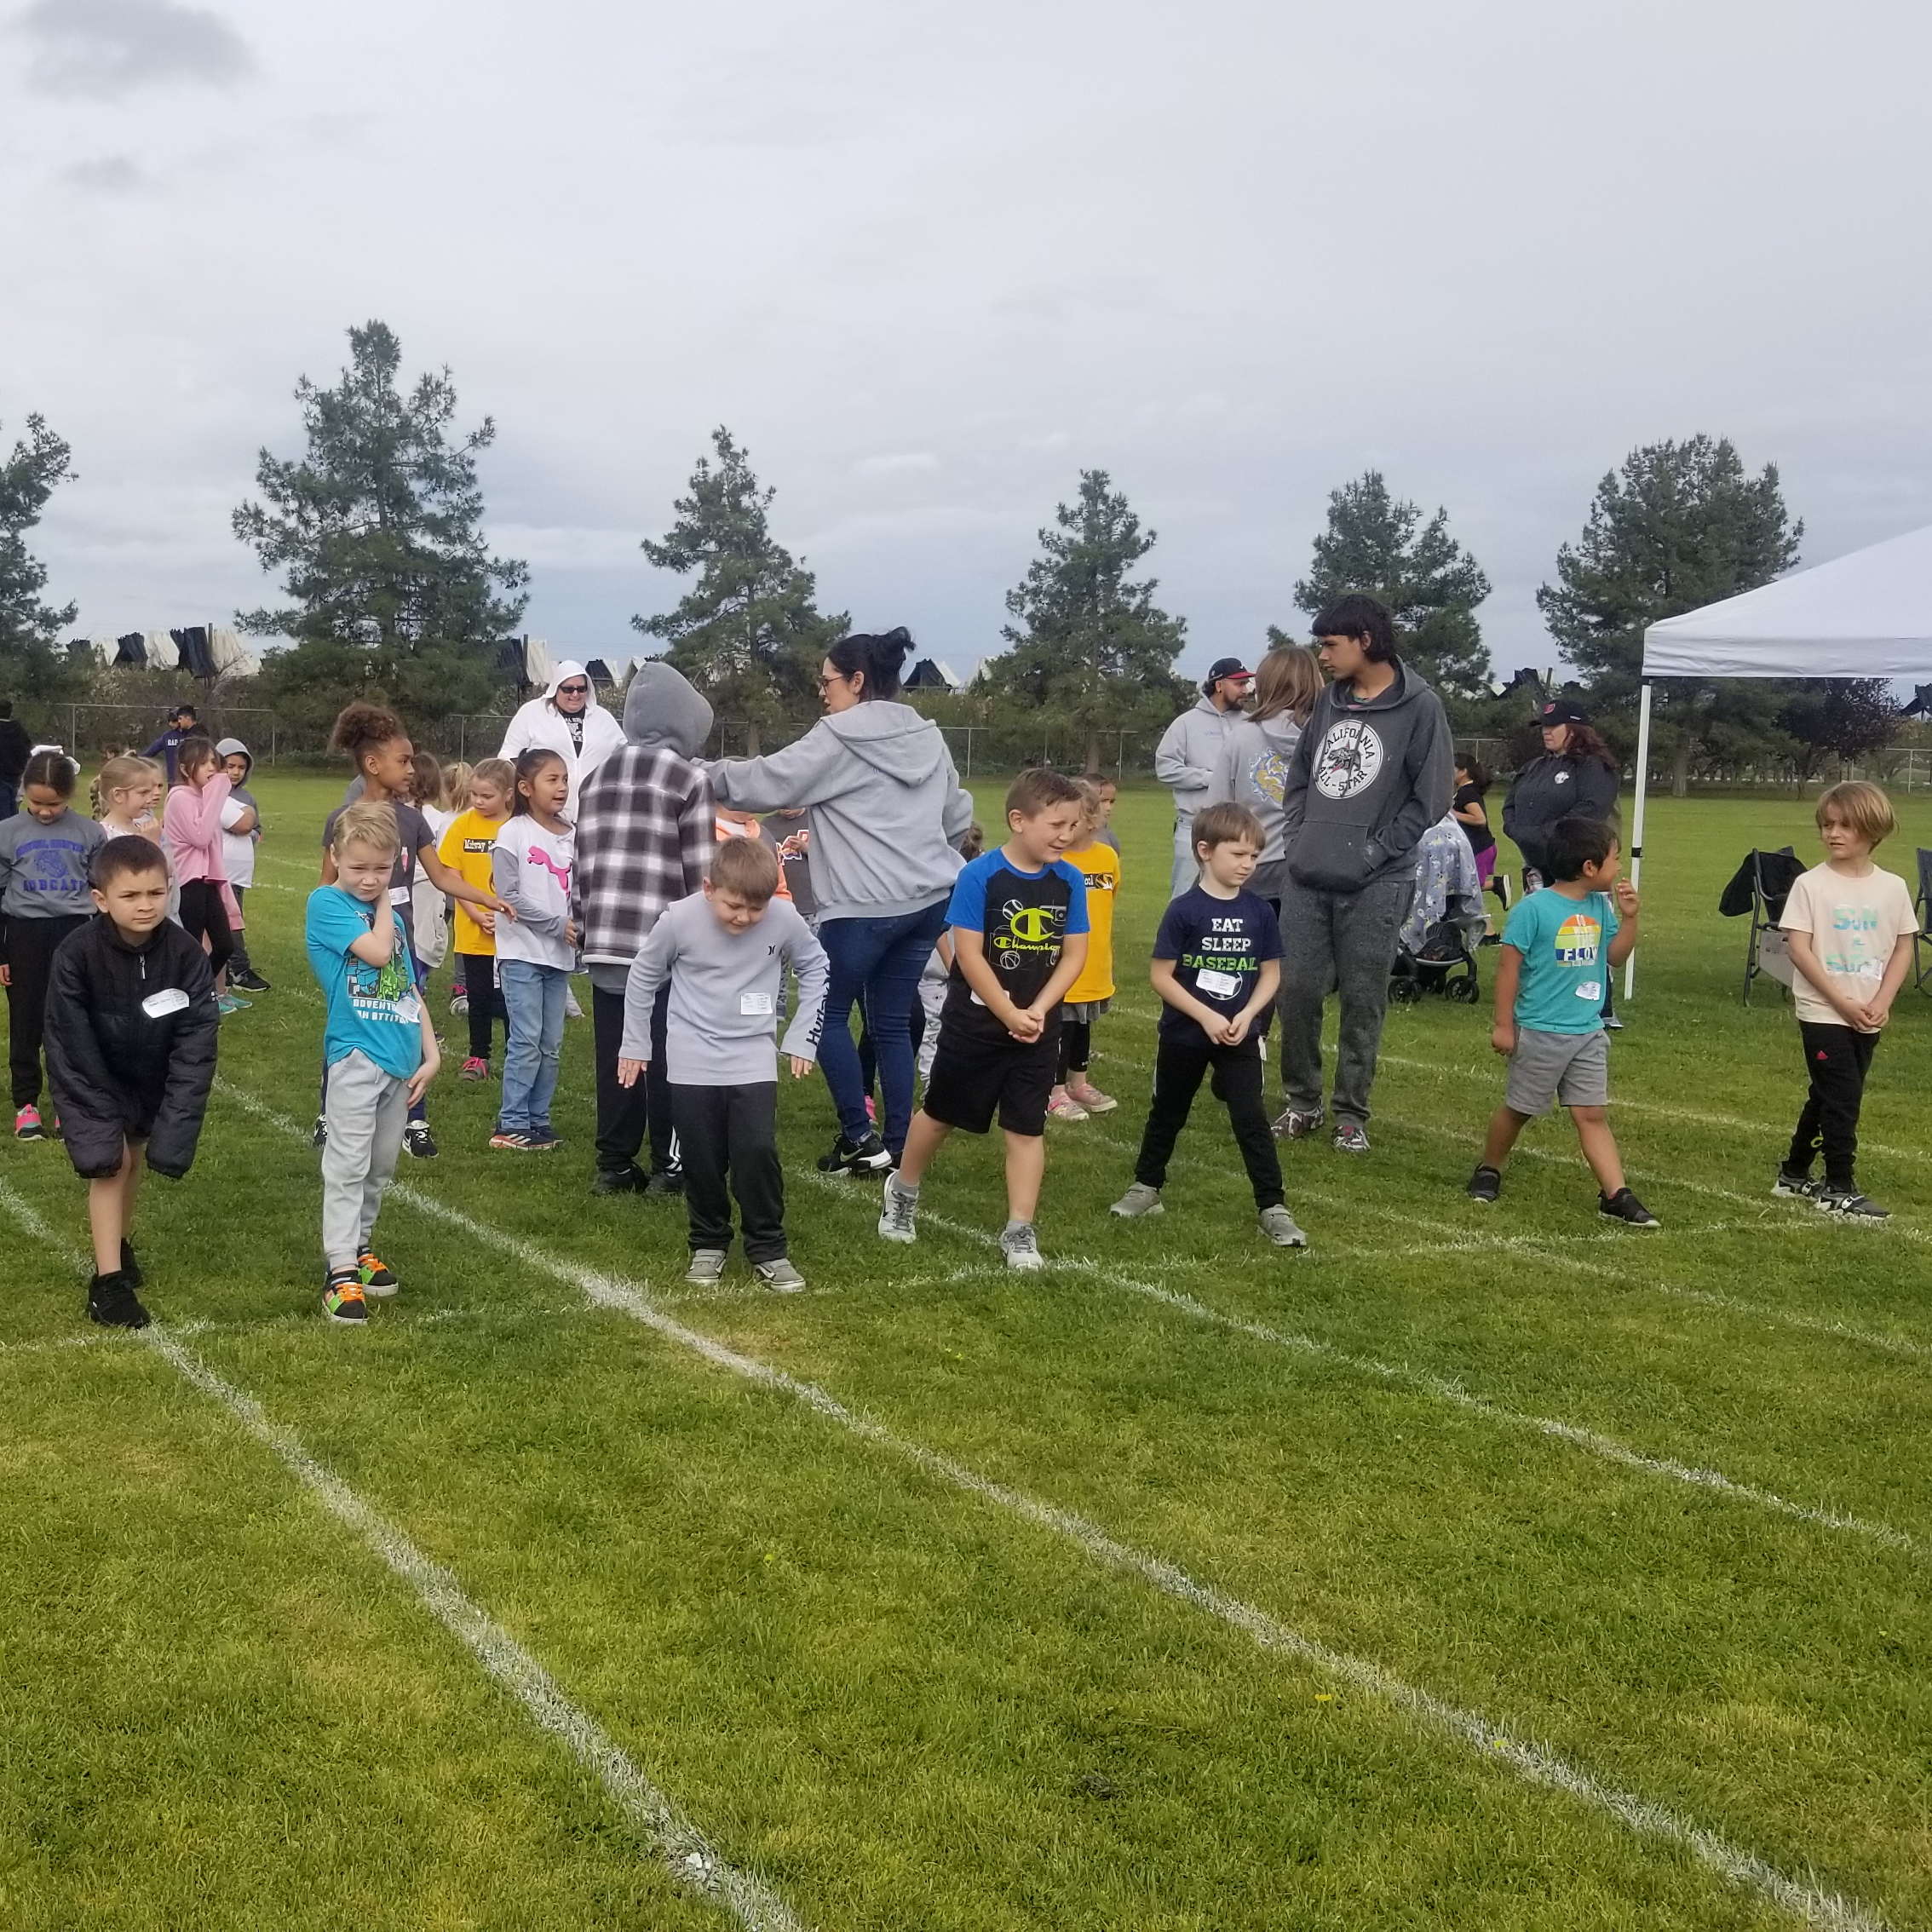 1st grade students running a race